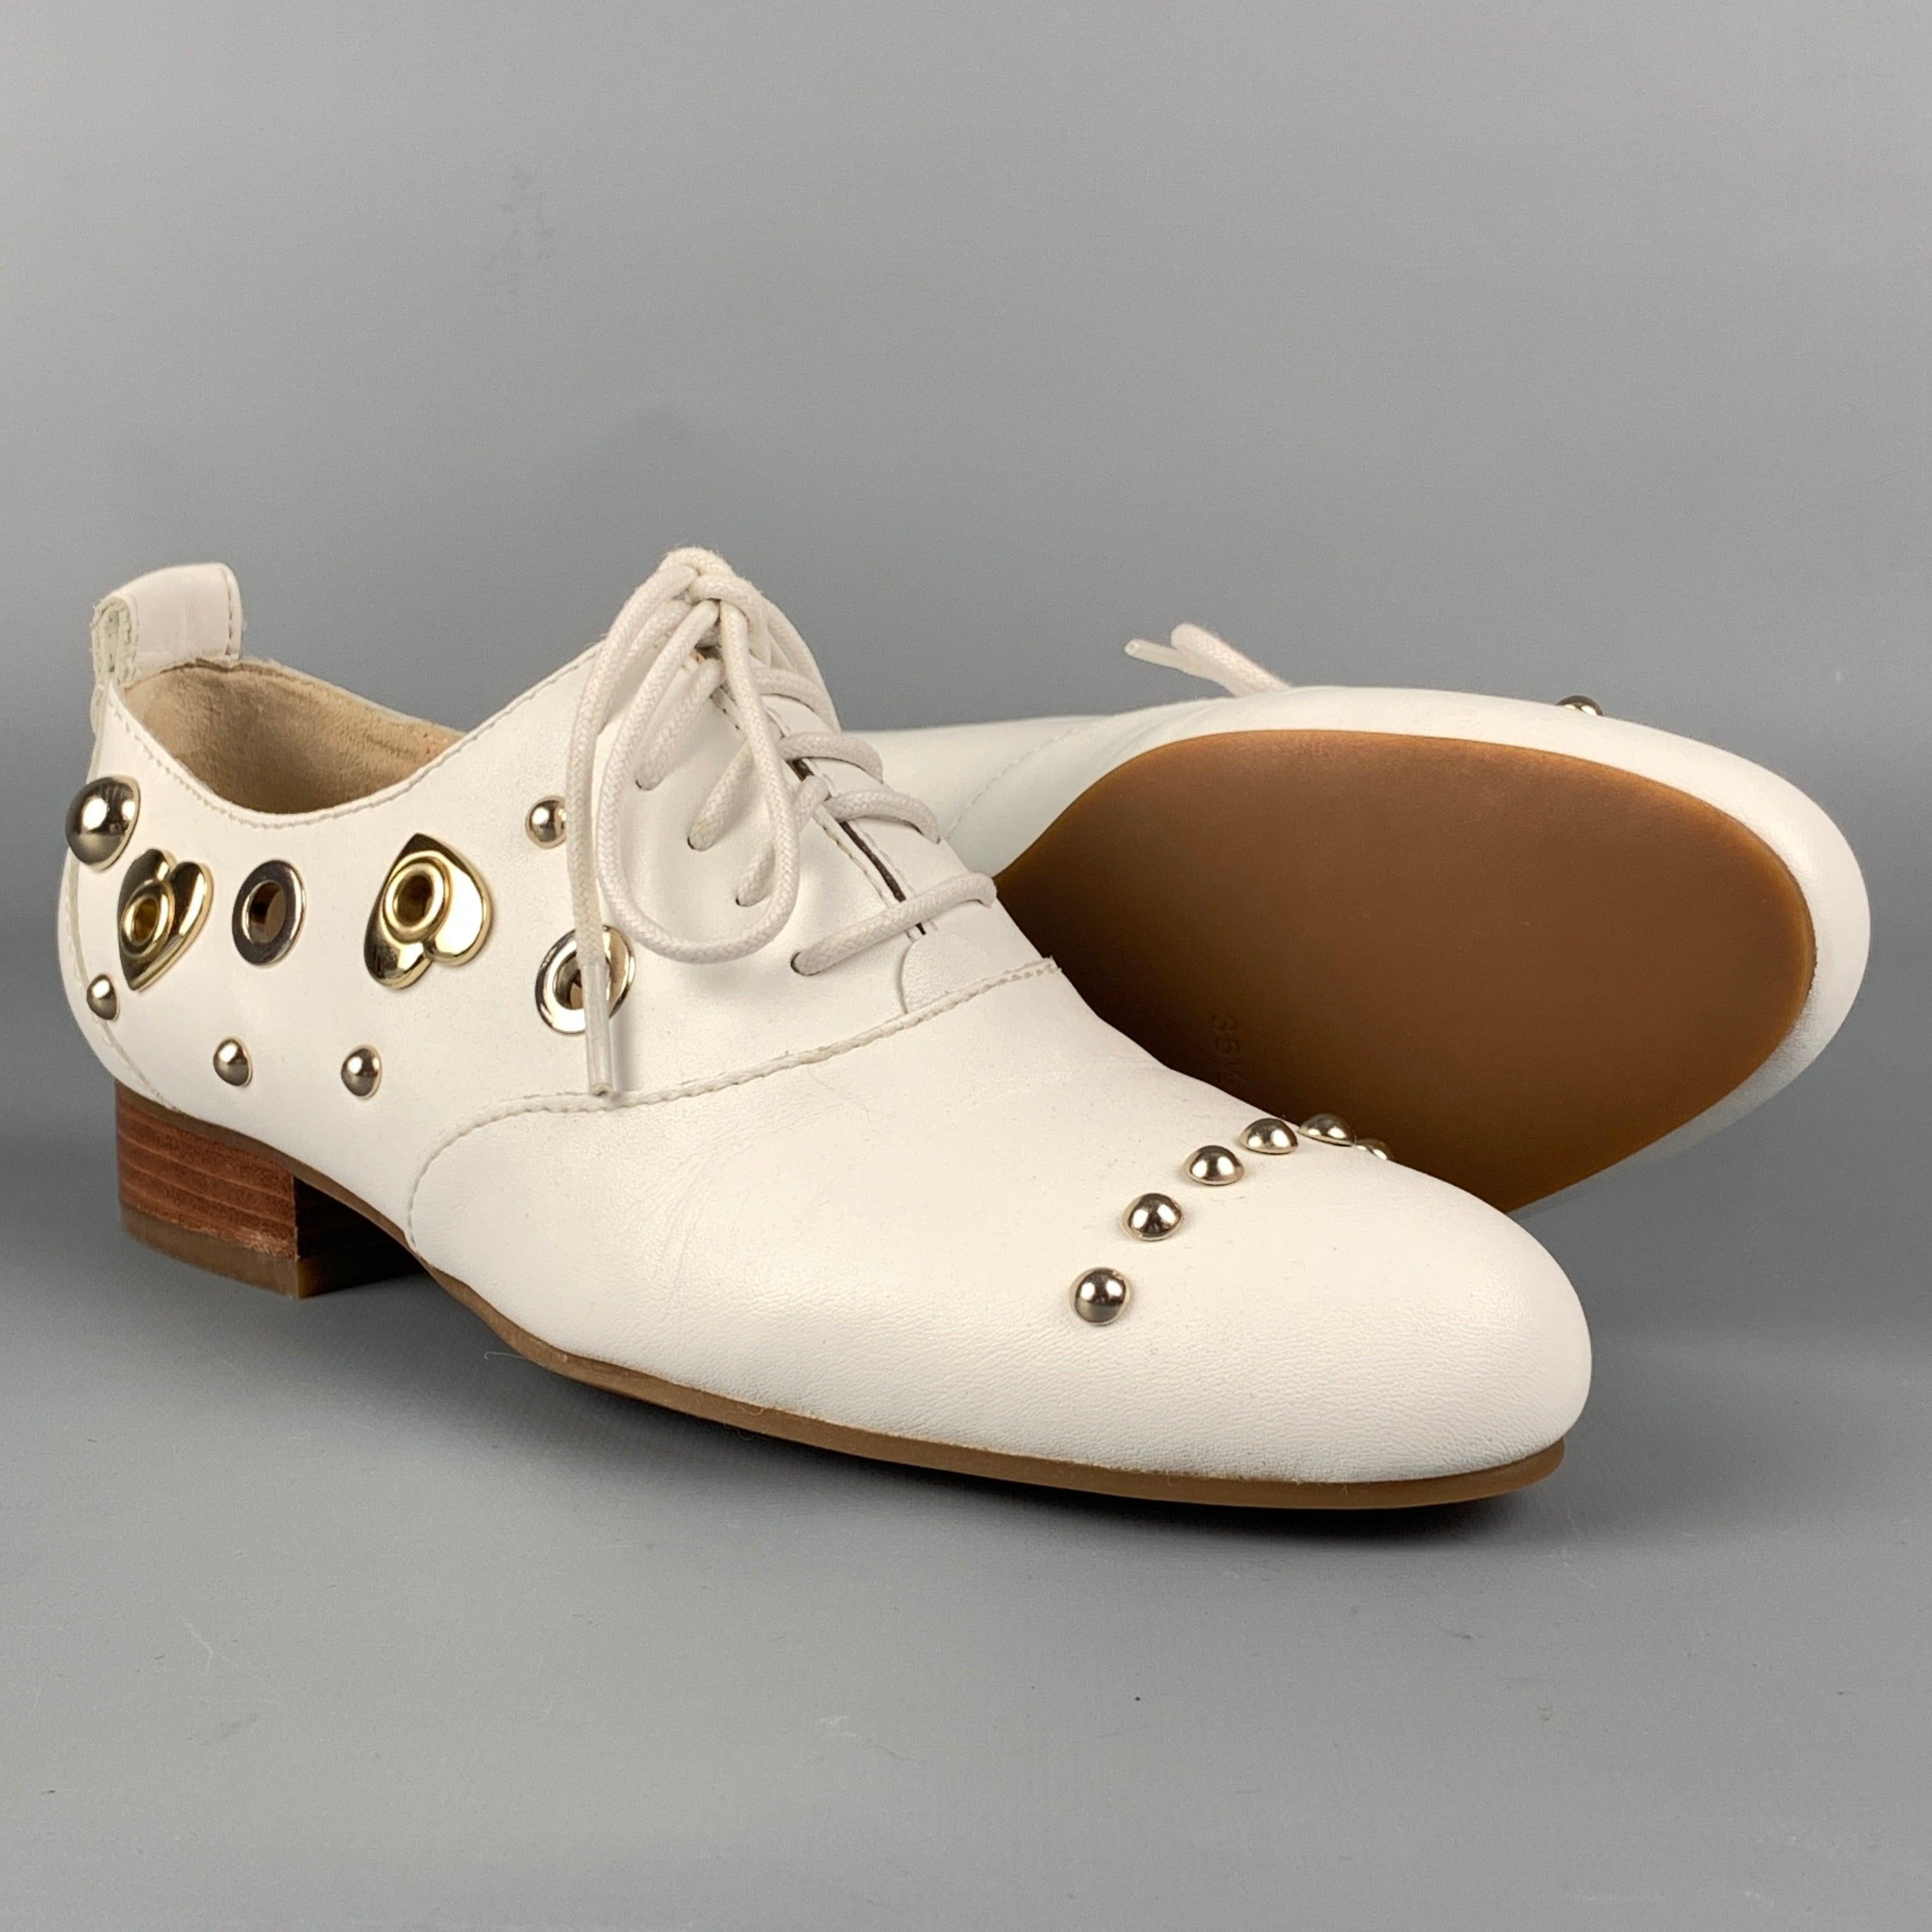 LOVE MOSCHINO - Chaussures plates cloutées en cuir blanc, taille 5,5 Bon état - En vente à San Francisco, CA